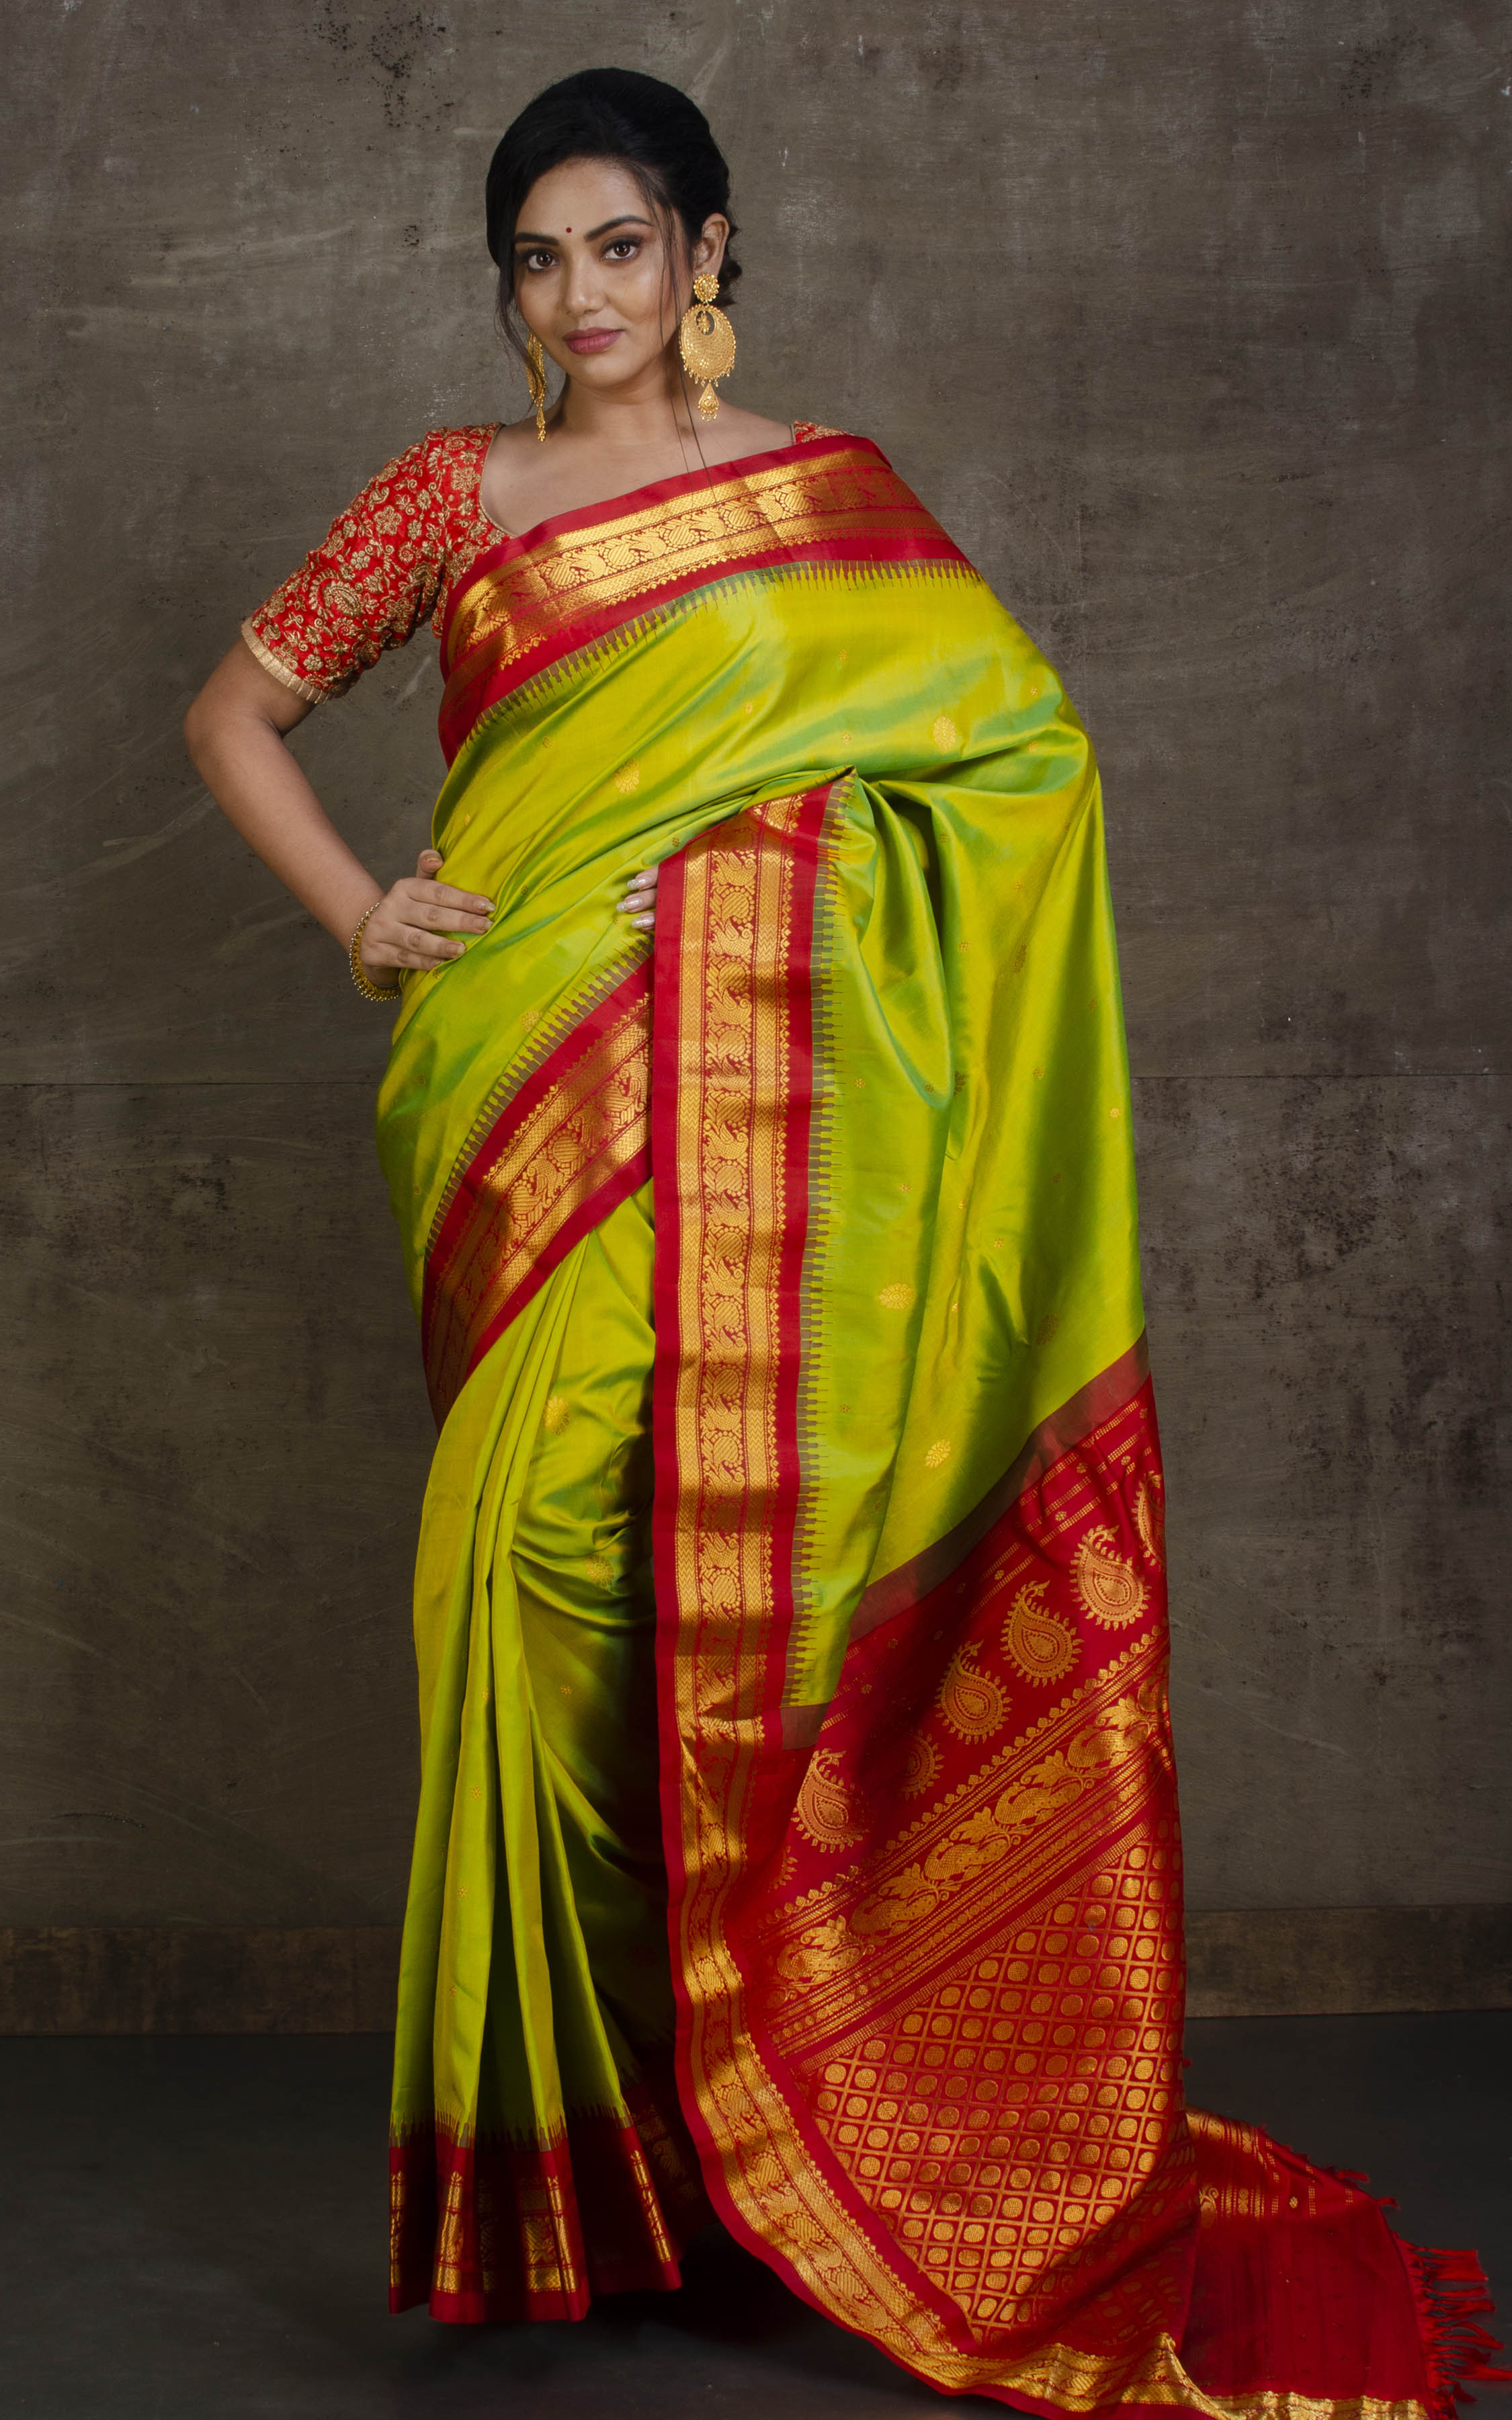 Nauvari Saree Drape #saree #indianwear - YouTube